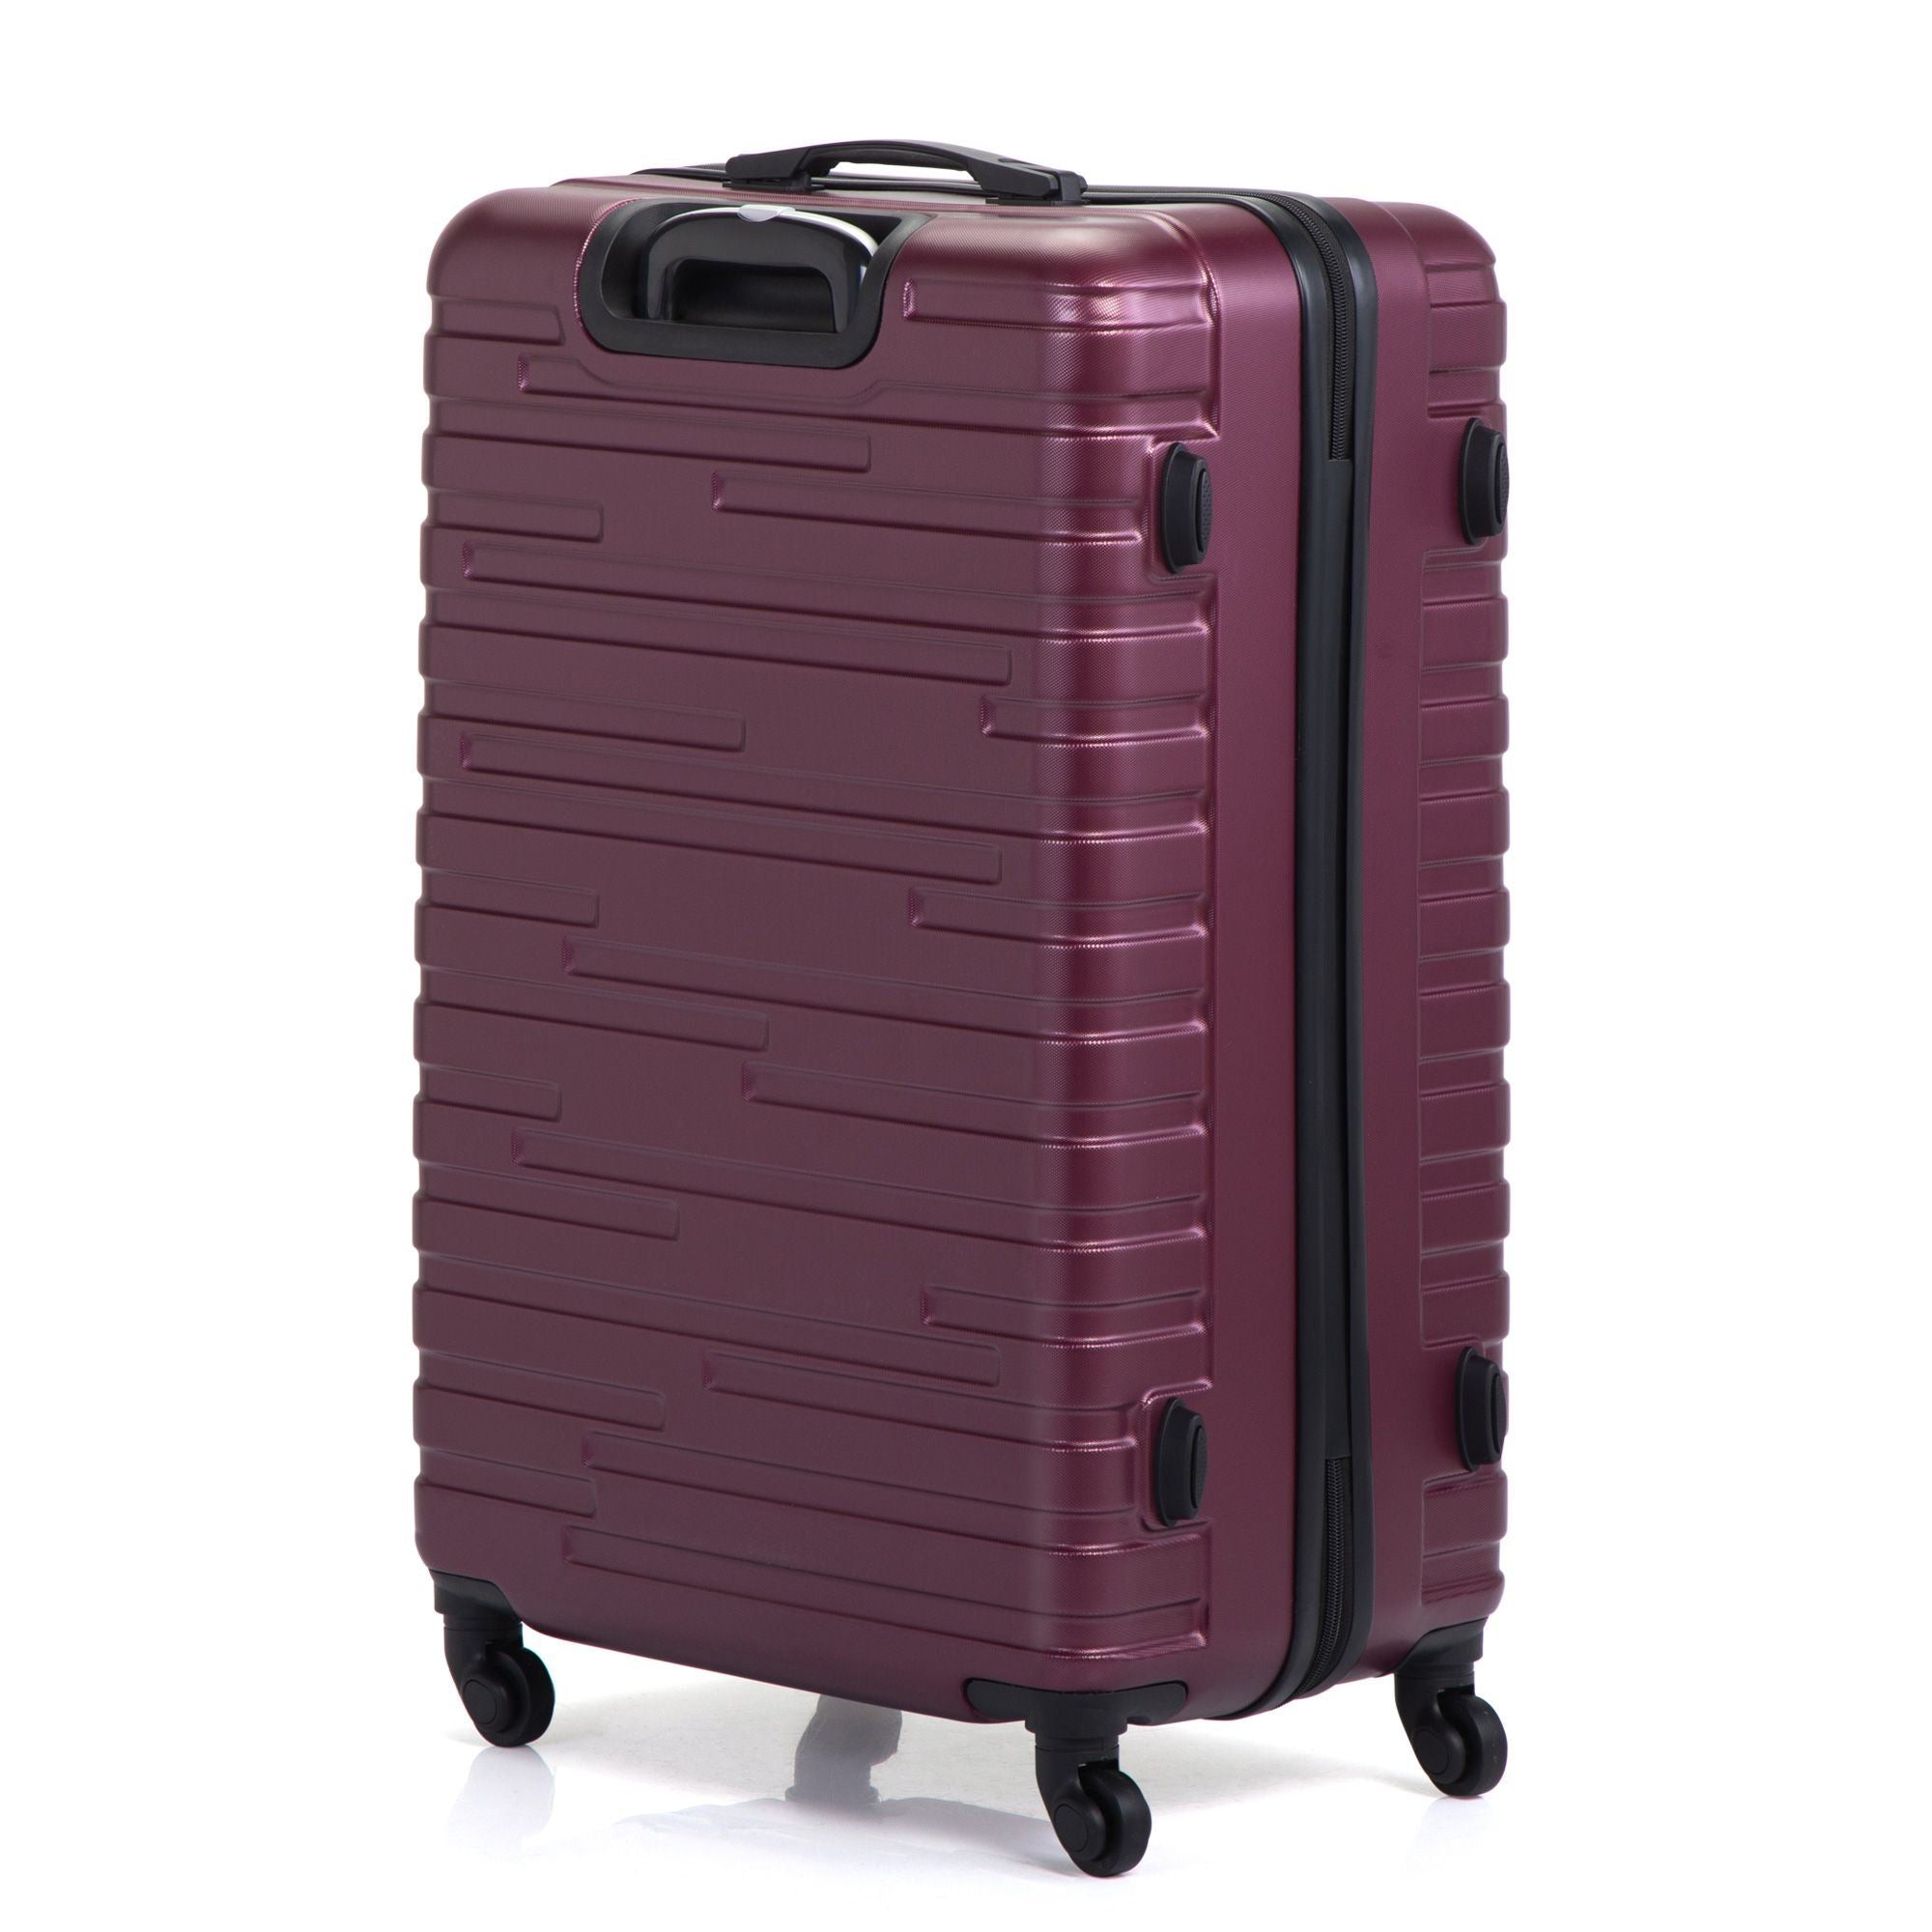 3-piece Trolley Case Set, 360 Degree Rotation Wheels with TSA Lock, Travel Suitcase Set, Claret XH Moorescarts